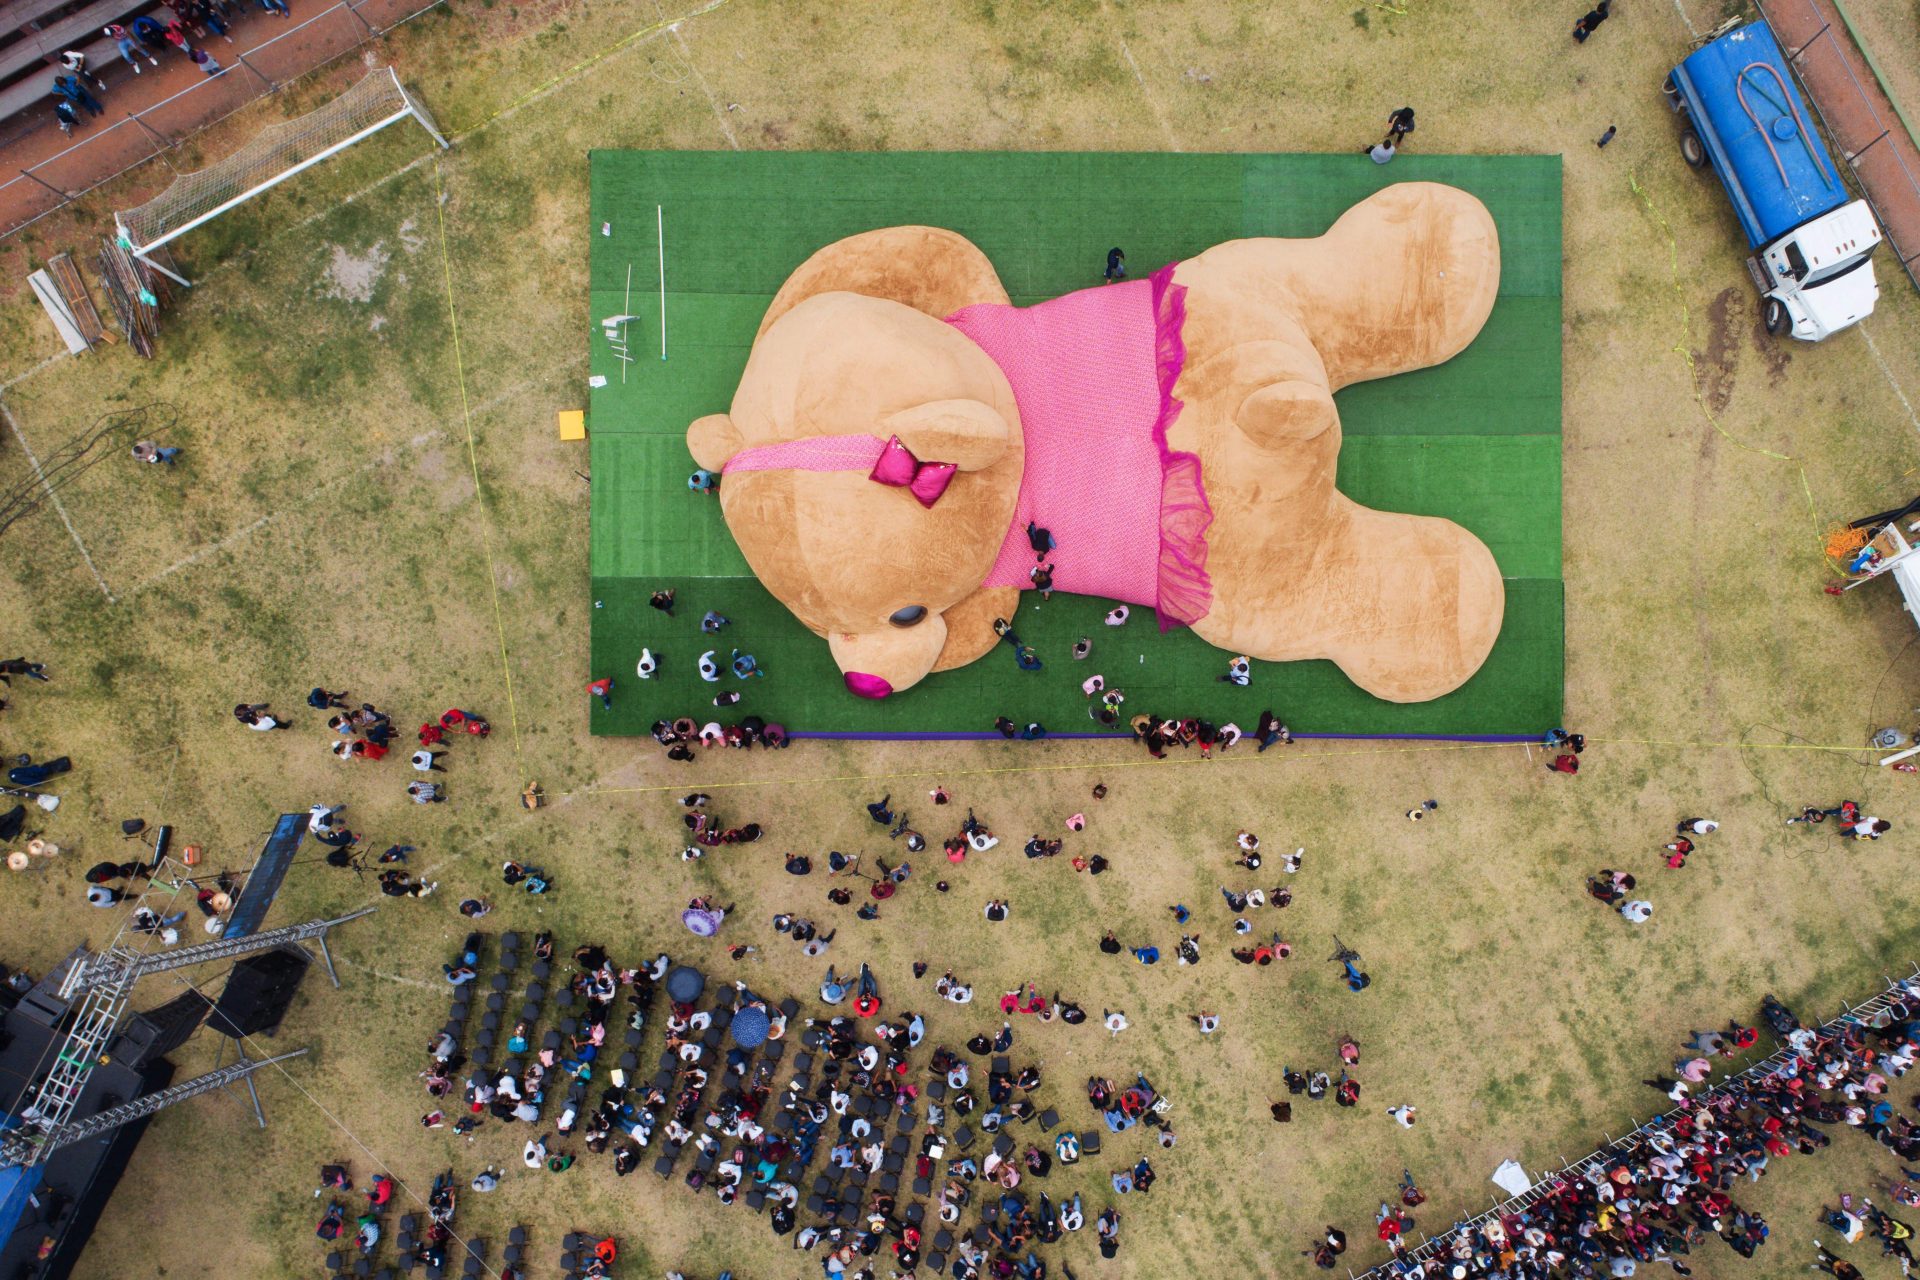 World's biggest teddy bear